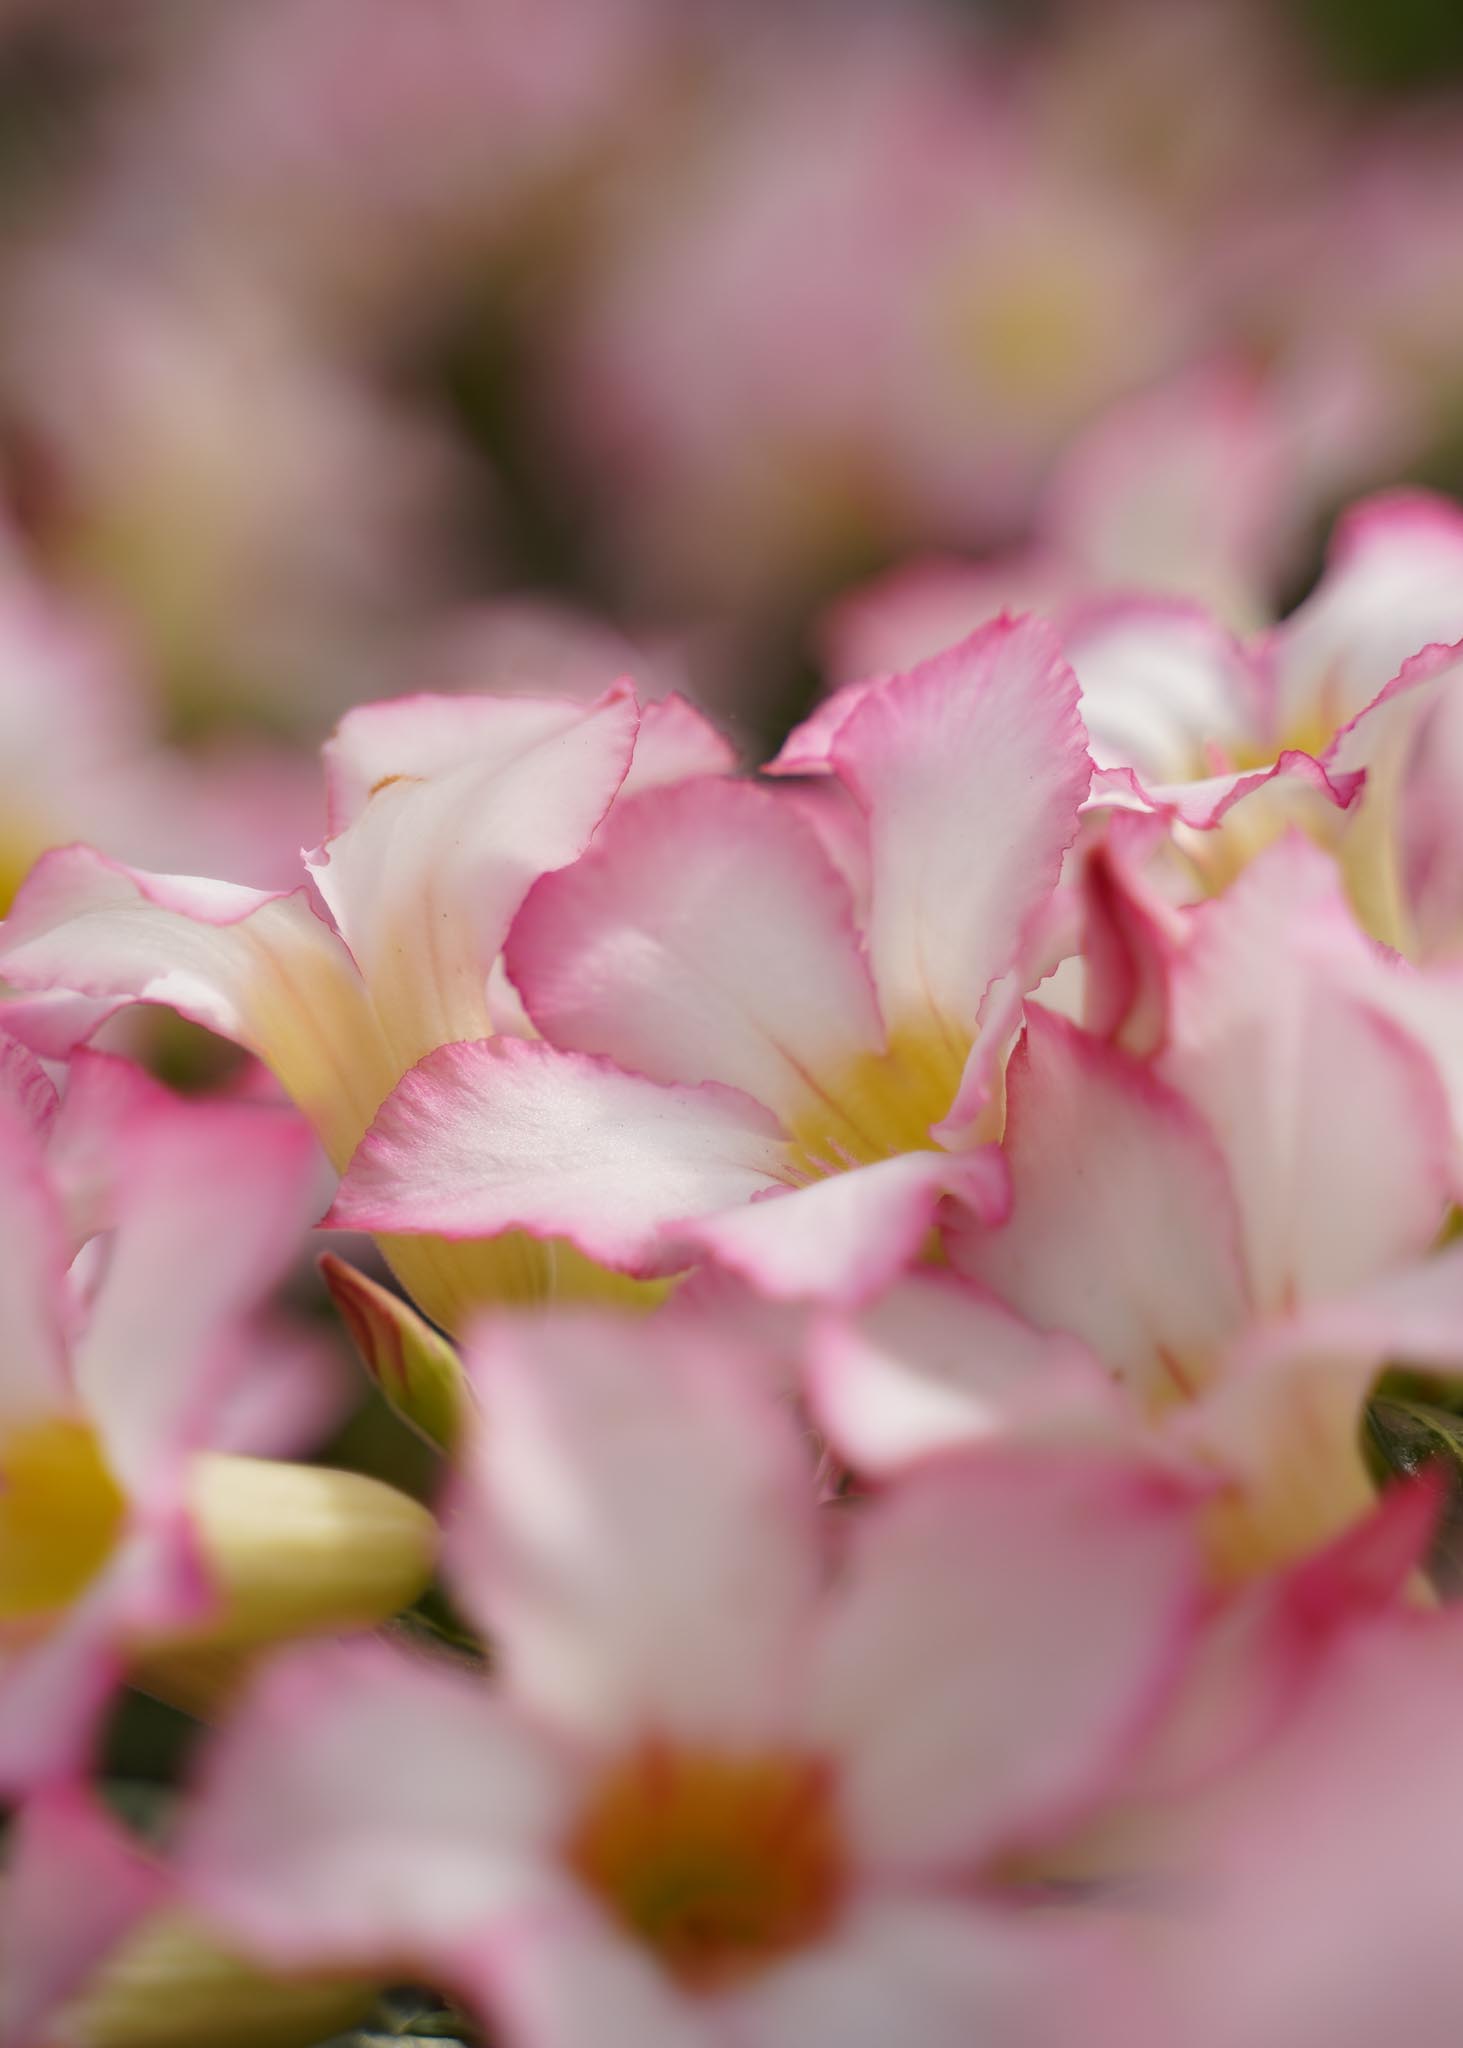 Woestijnroos (Adenium) met roze bloemen van kweker Richplant